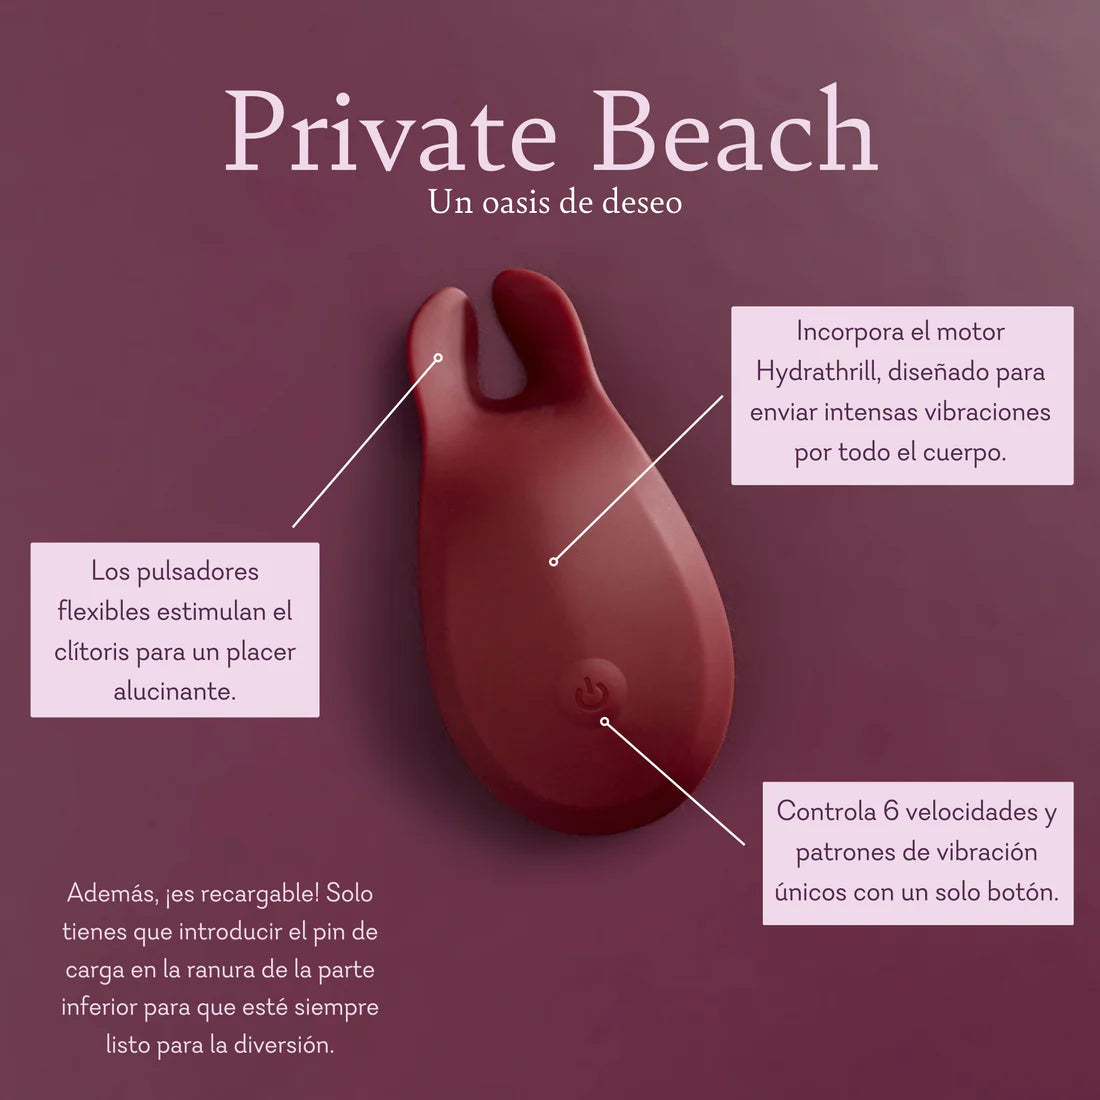 Private Beach